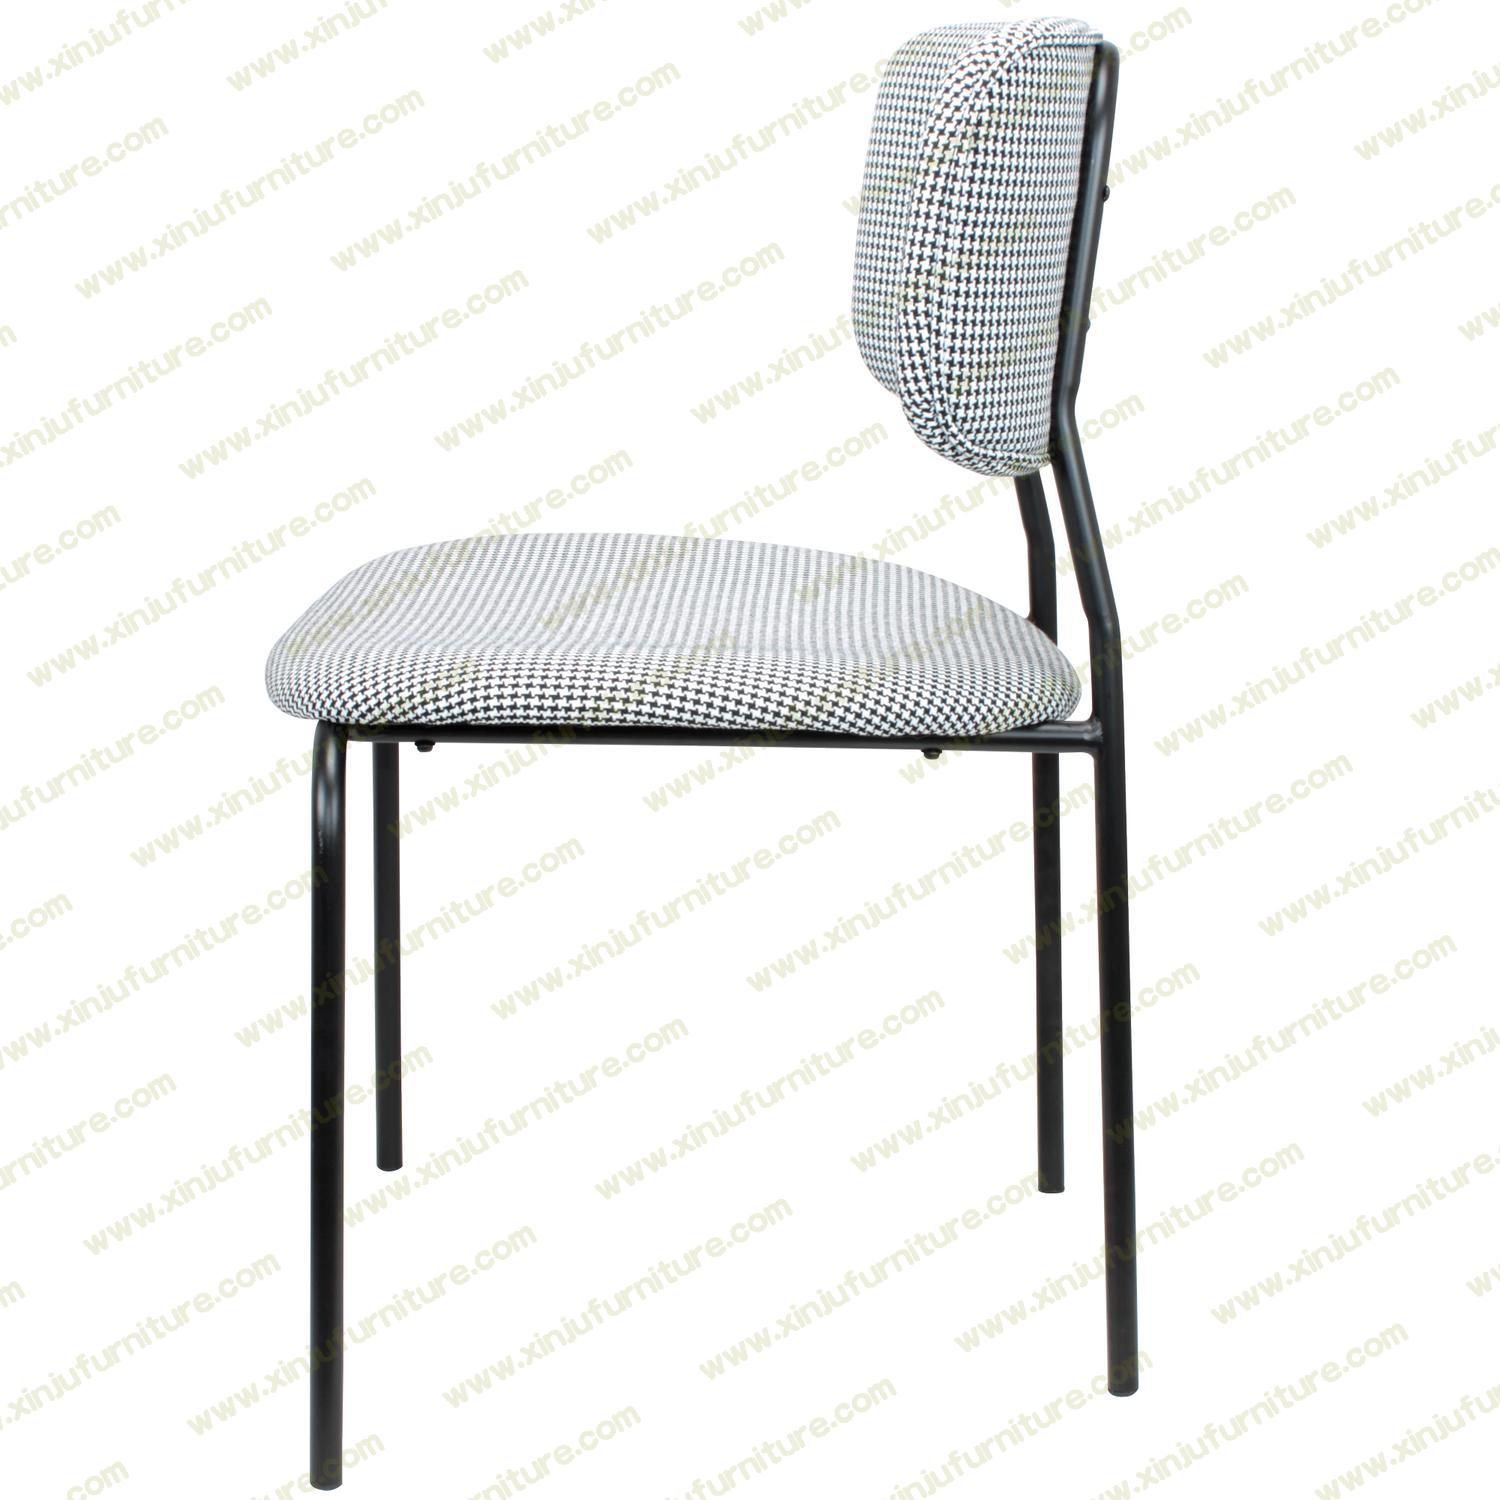 Idyllic simple dining chair